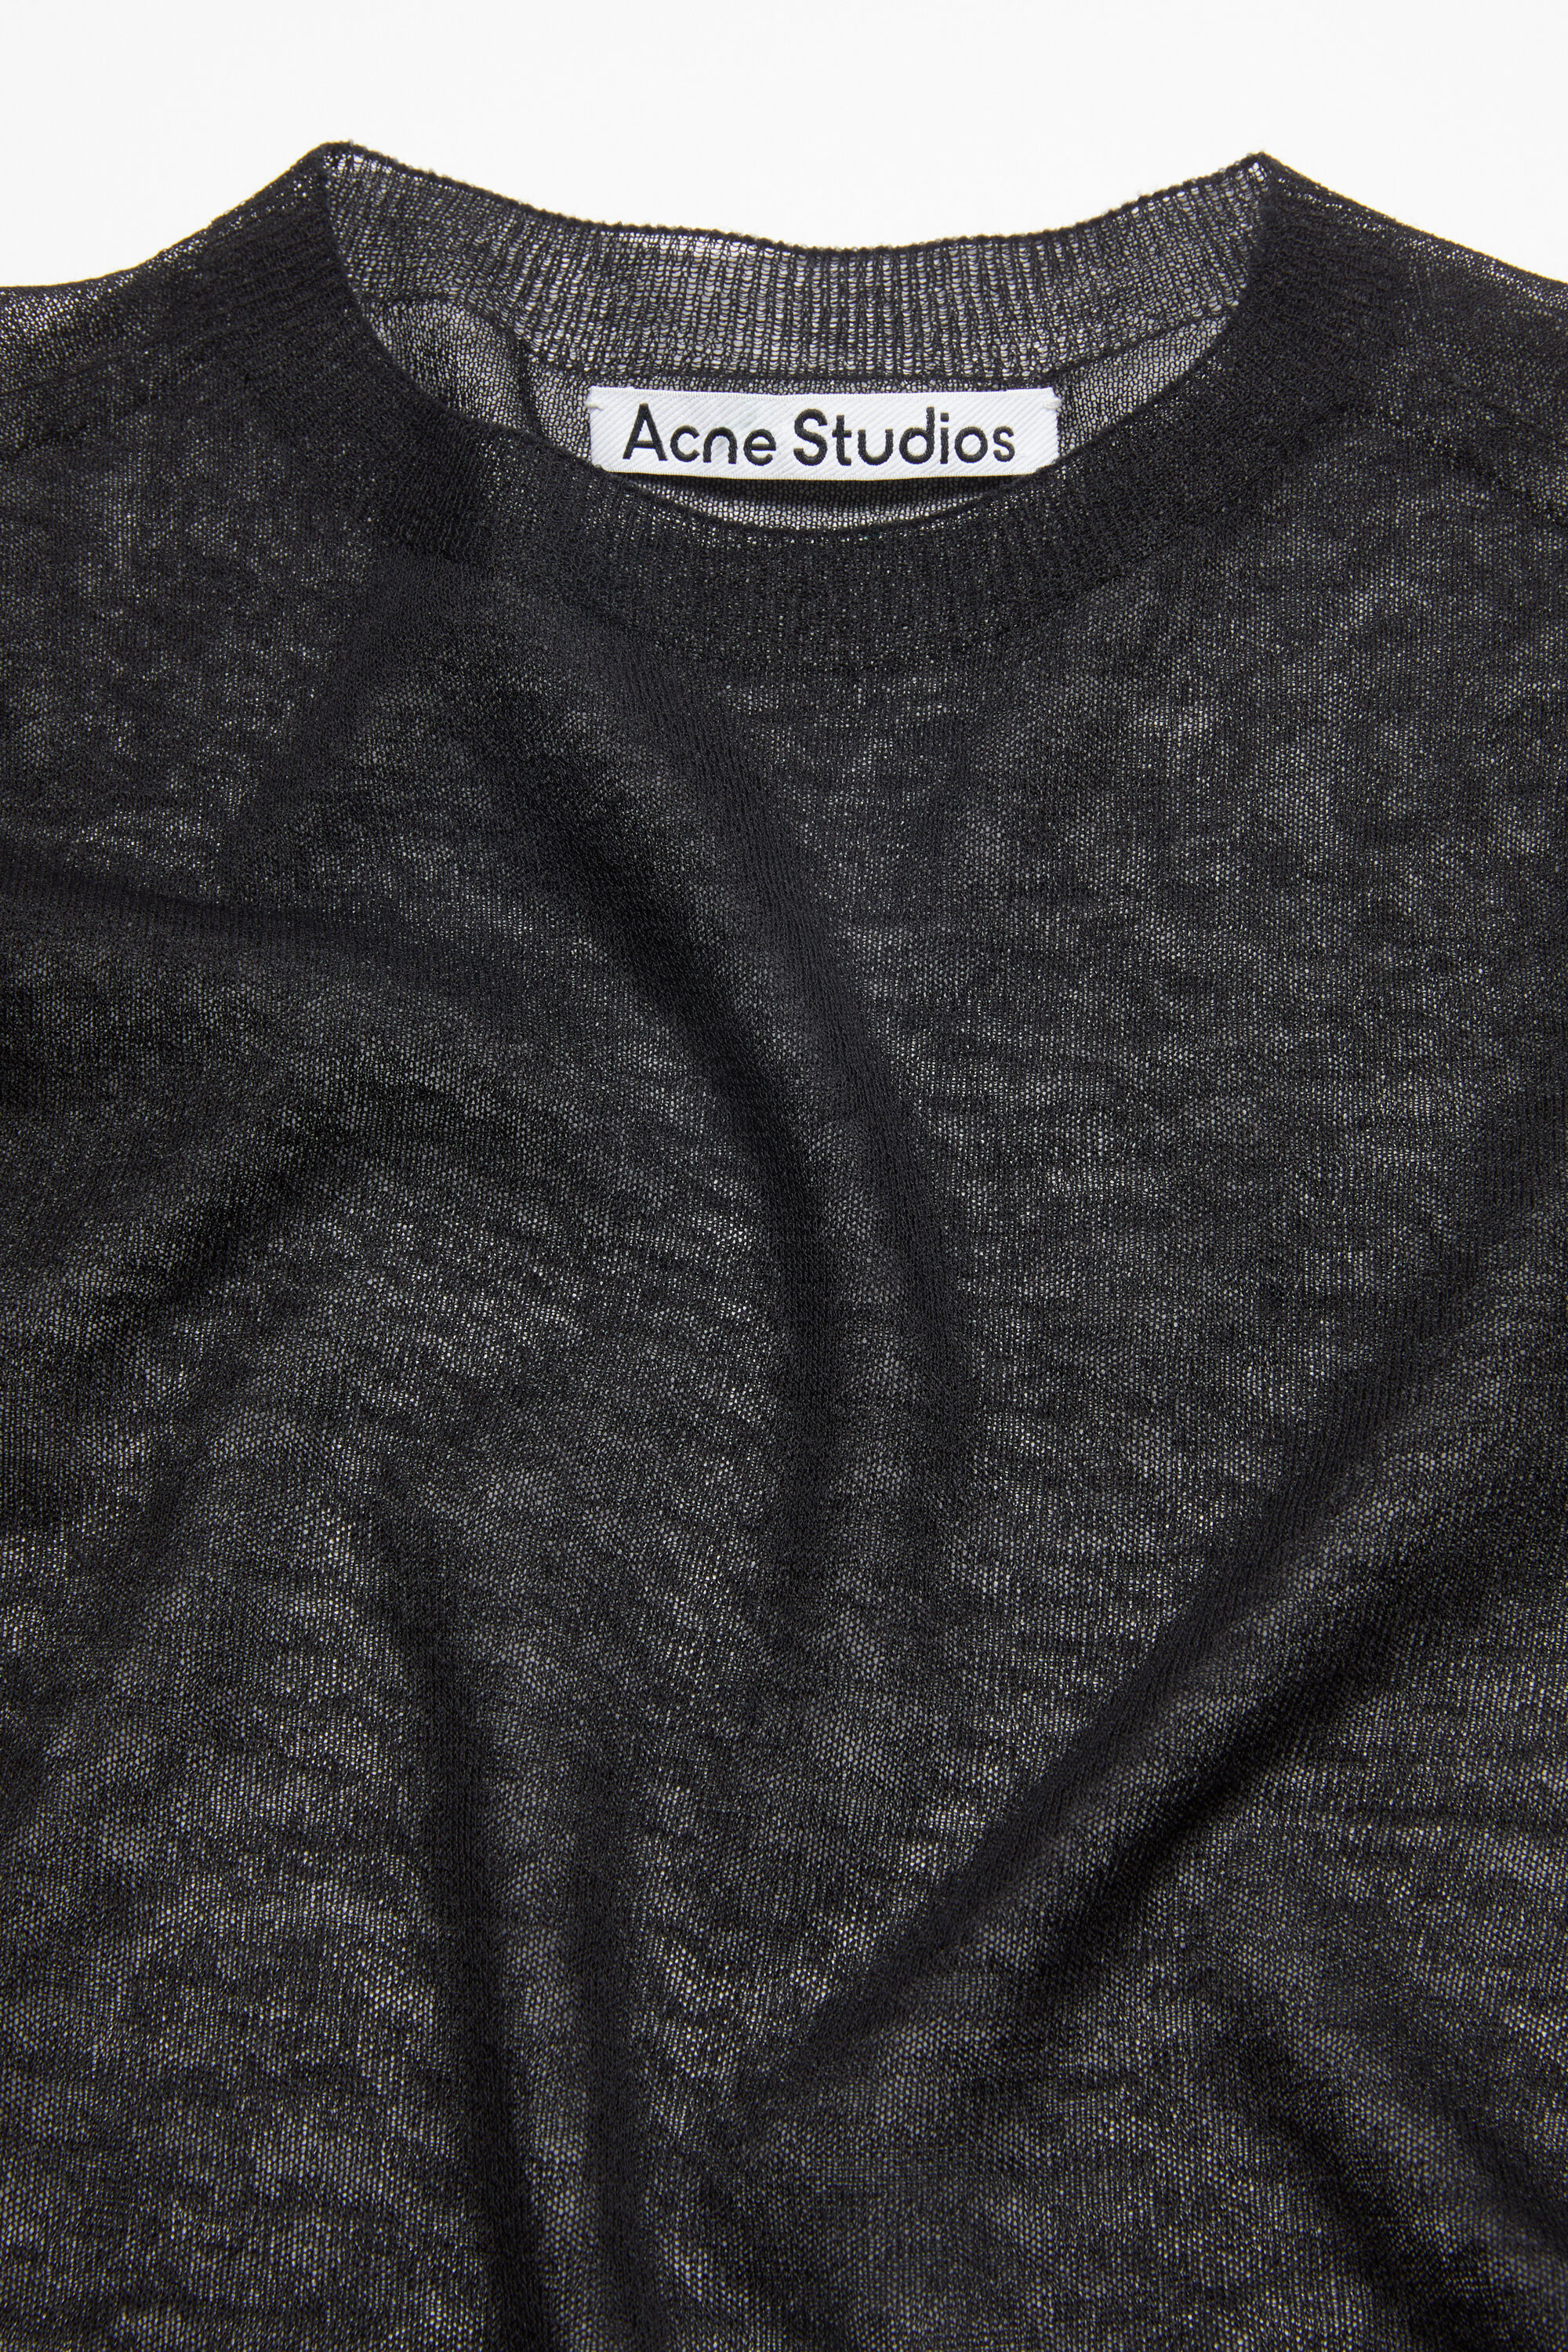 Acne Studios - Sheer knit t-shirt - Black